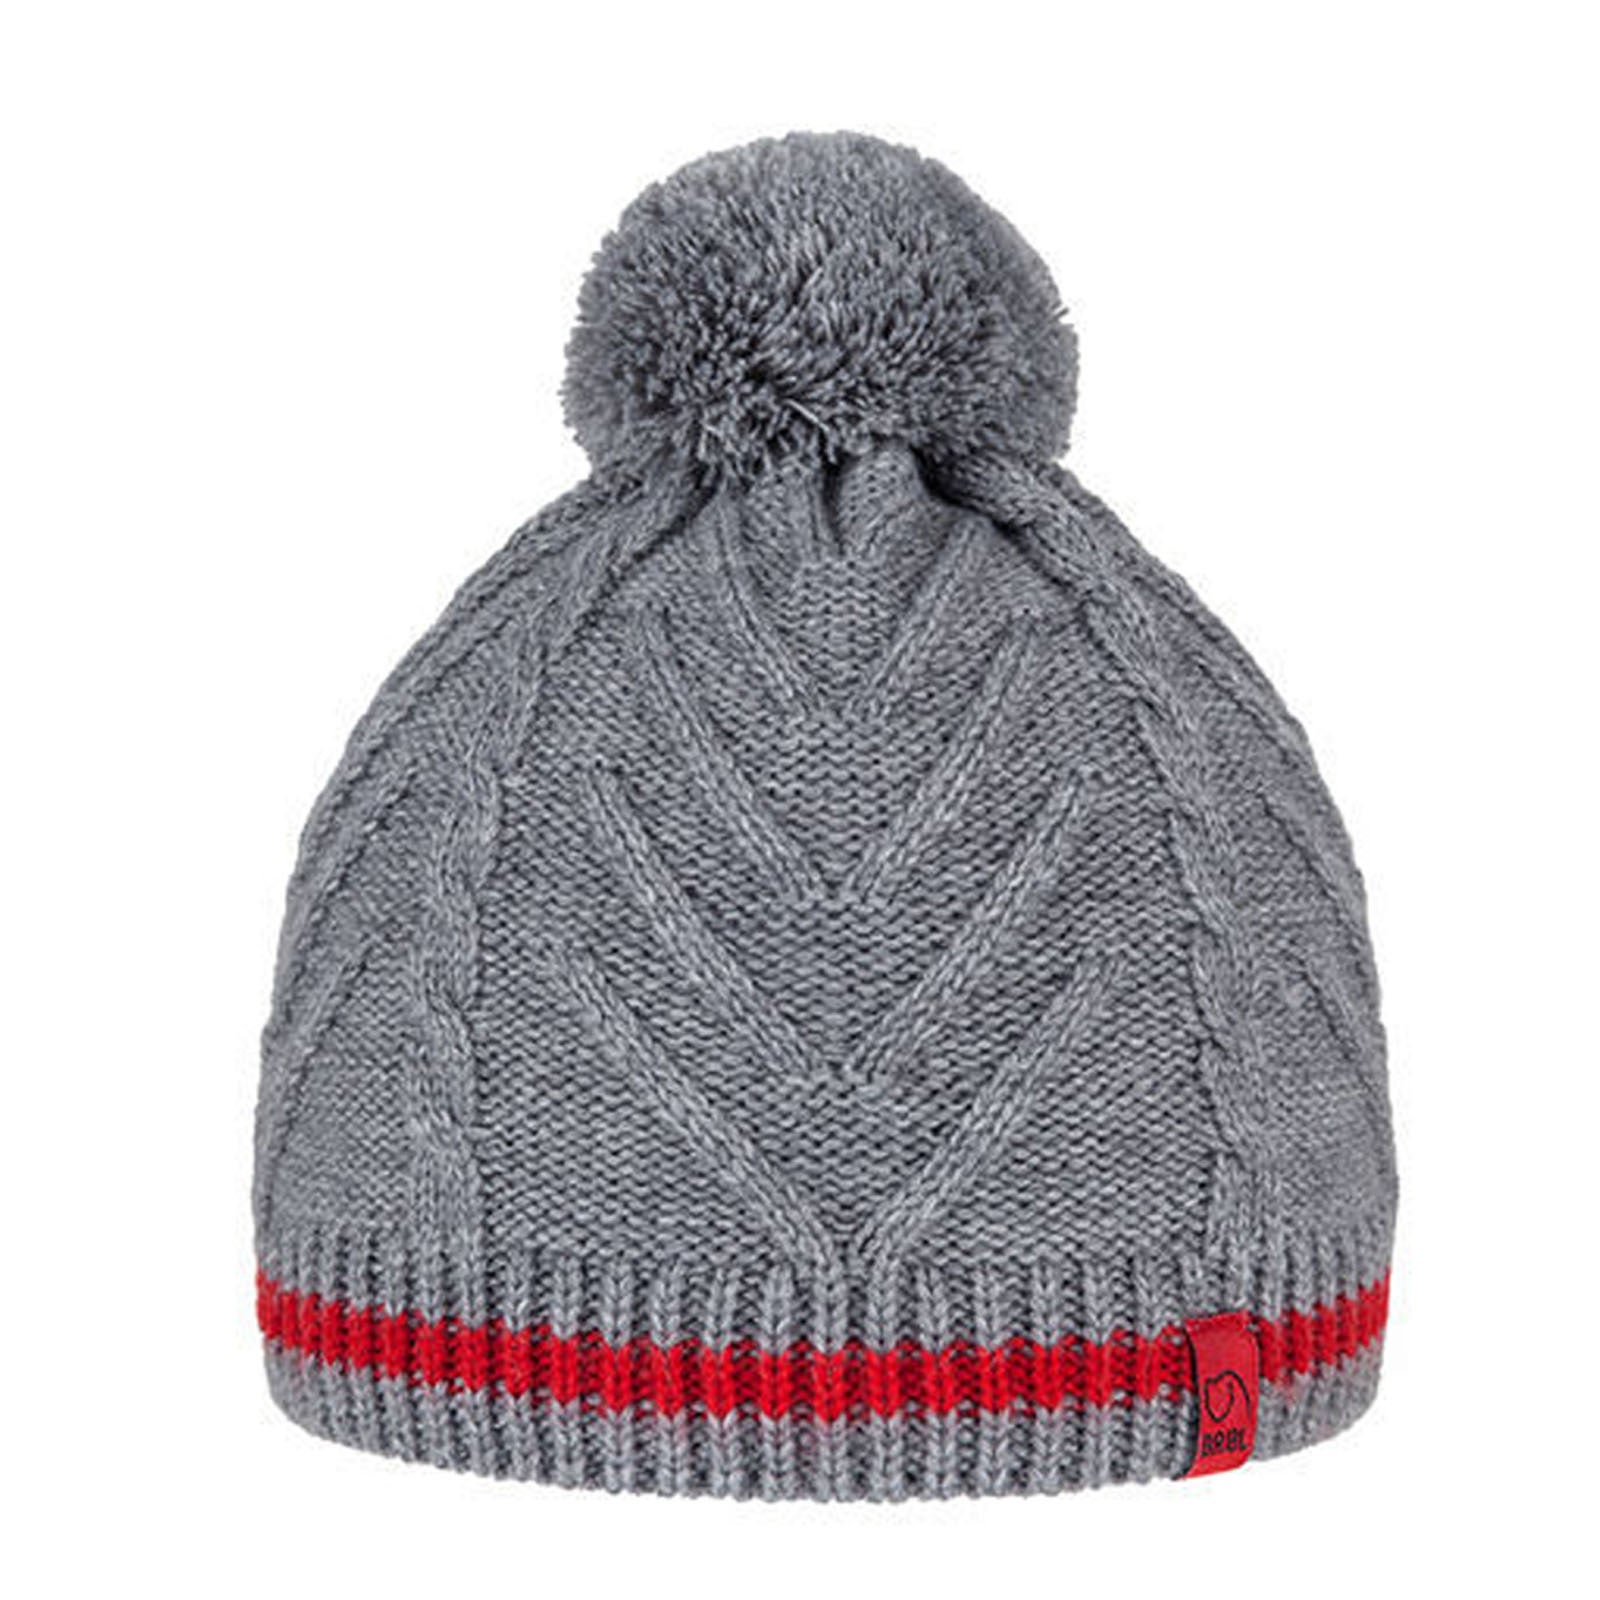 BRBL Dolomiti Merino Wool Blend Pull On BEANIE Warm Winter Hat Knitted Pom Pom